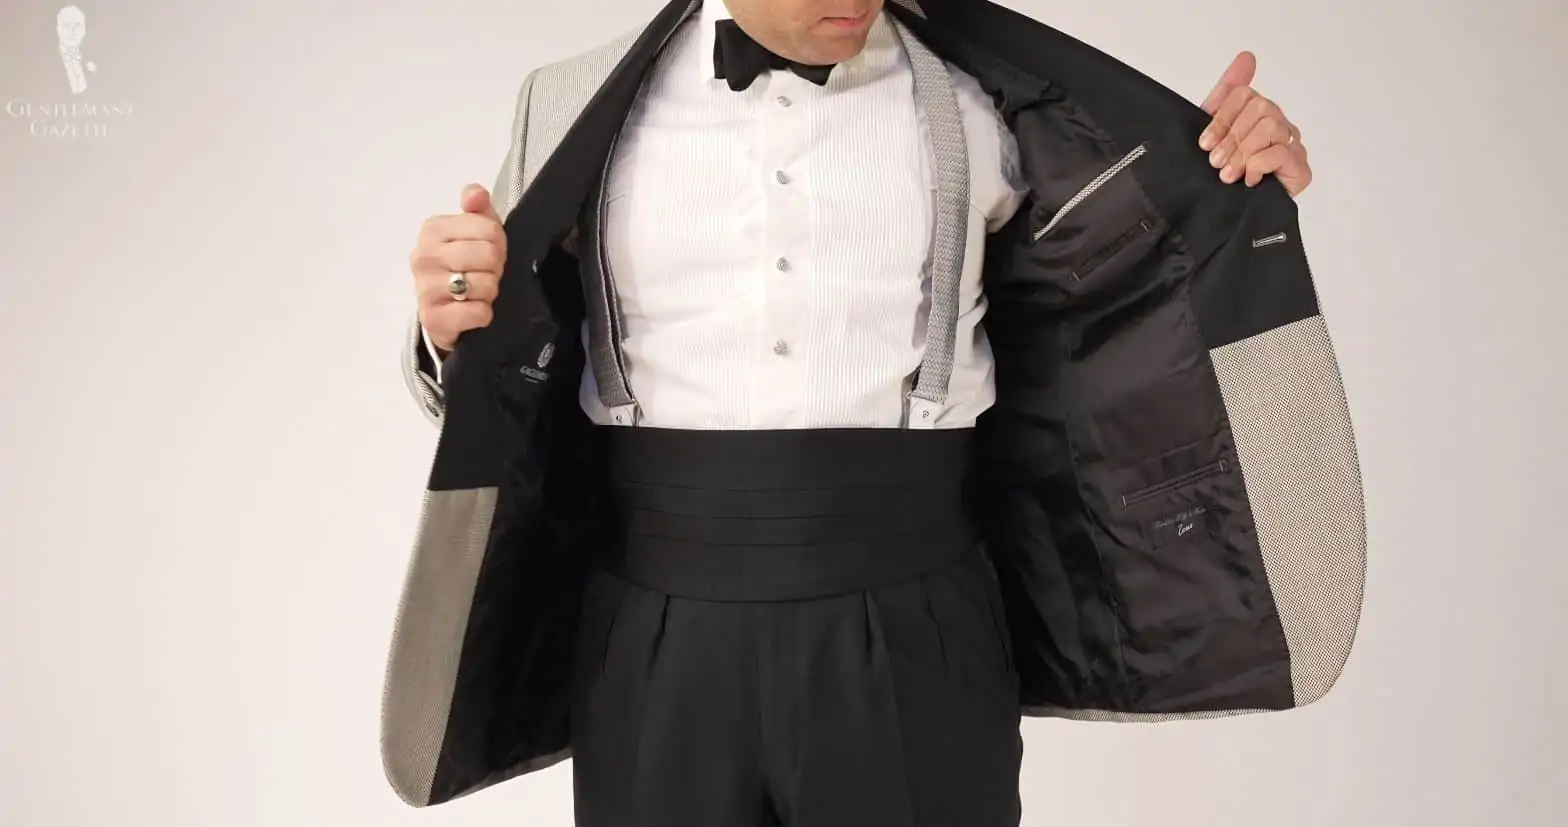 SUSPENDERS and BOW TIE COMBO SET-Tuxedo Classic Wedding Costume Tux Prom |  eBay